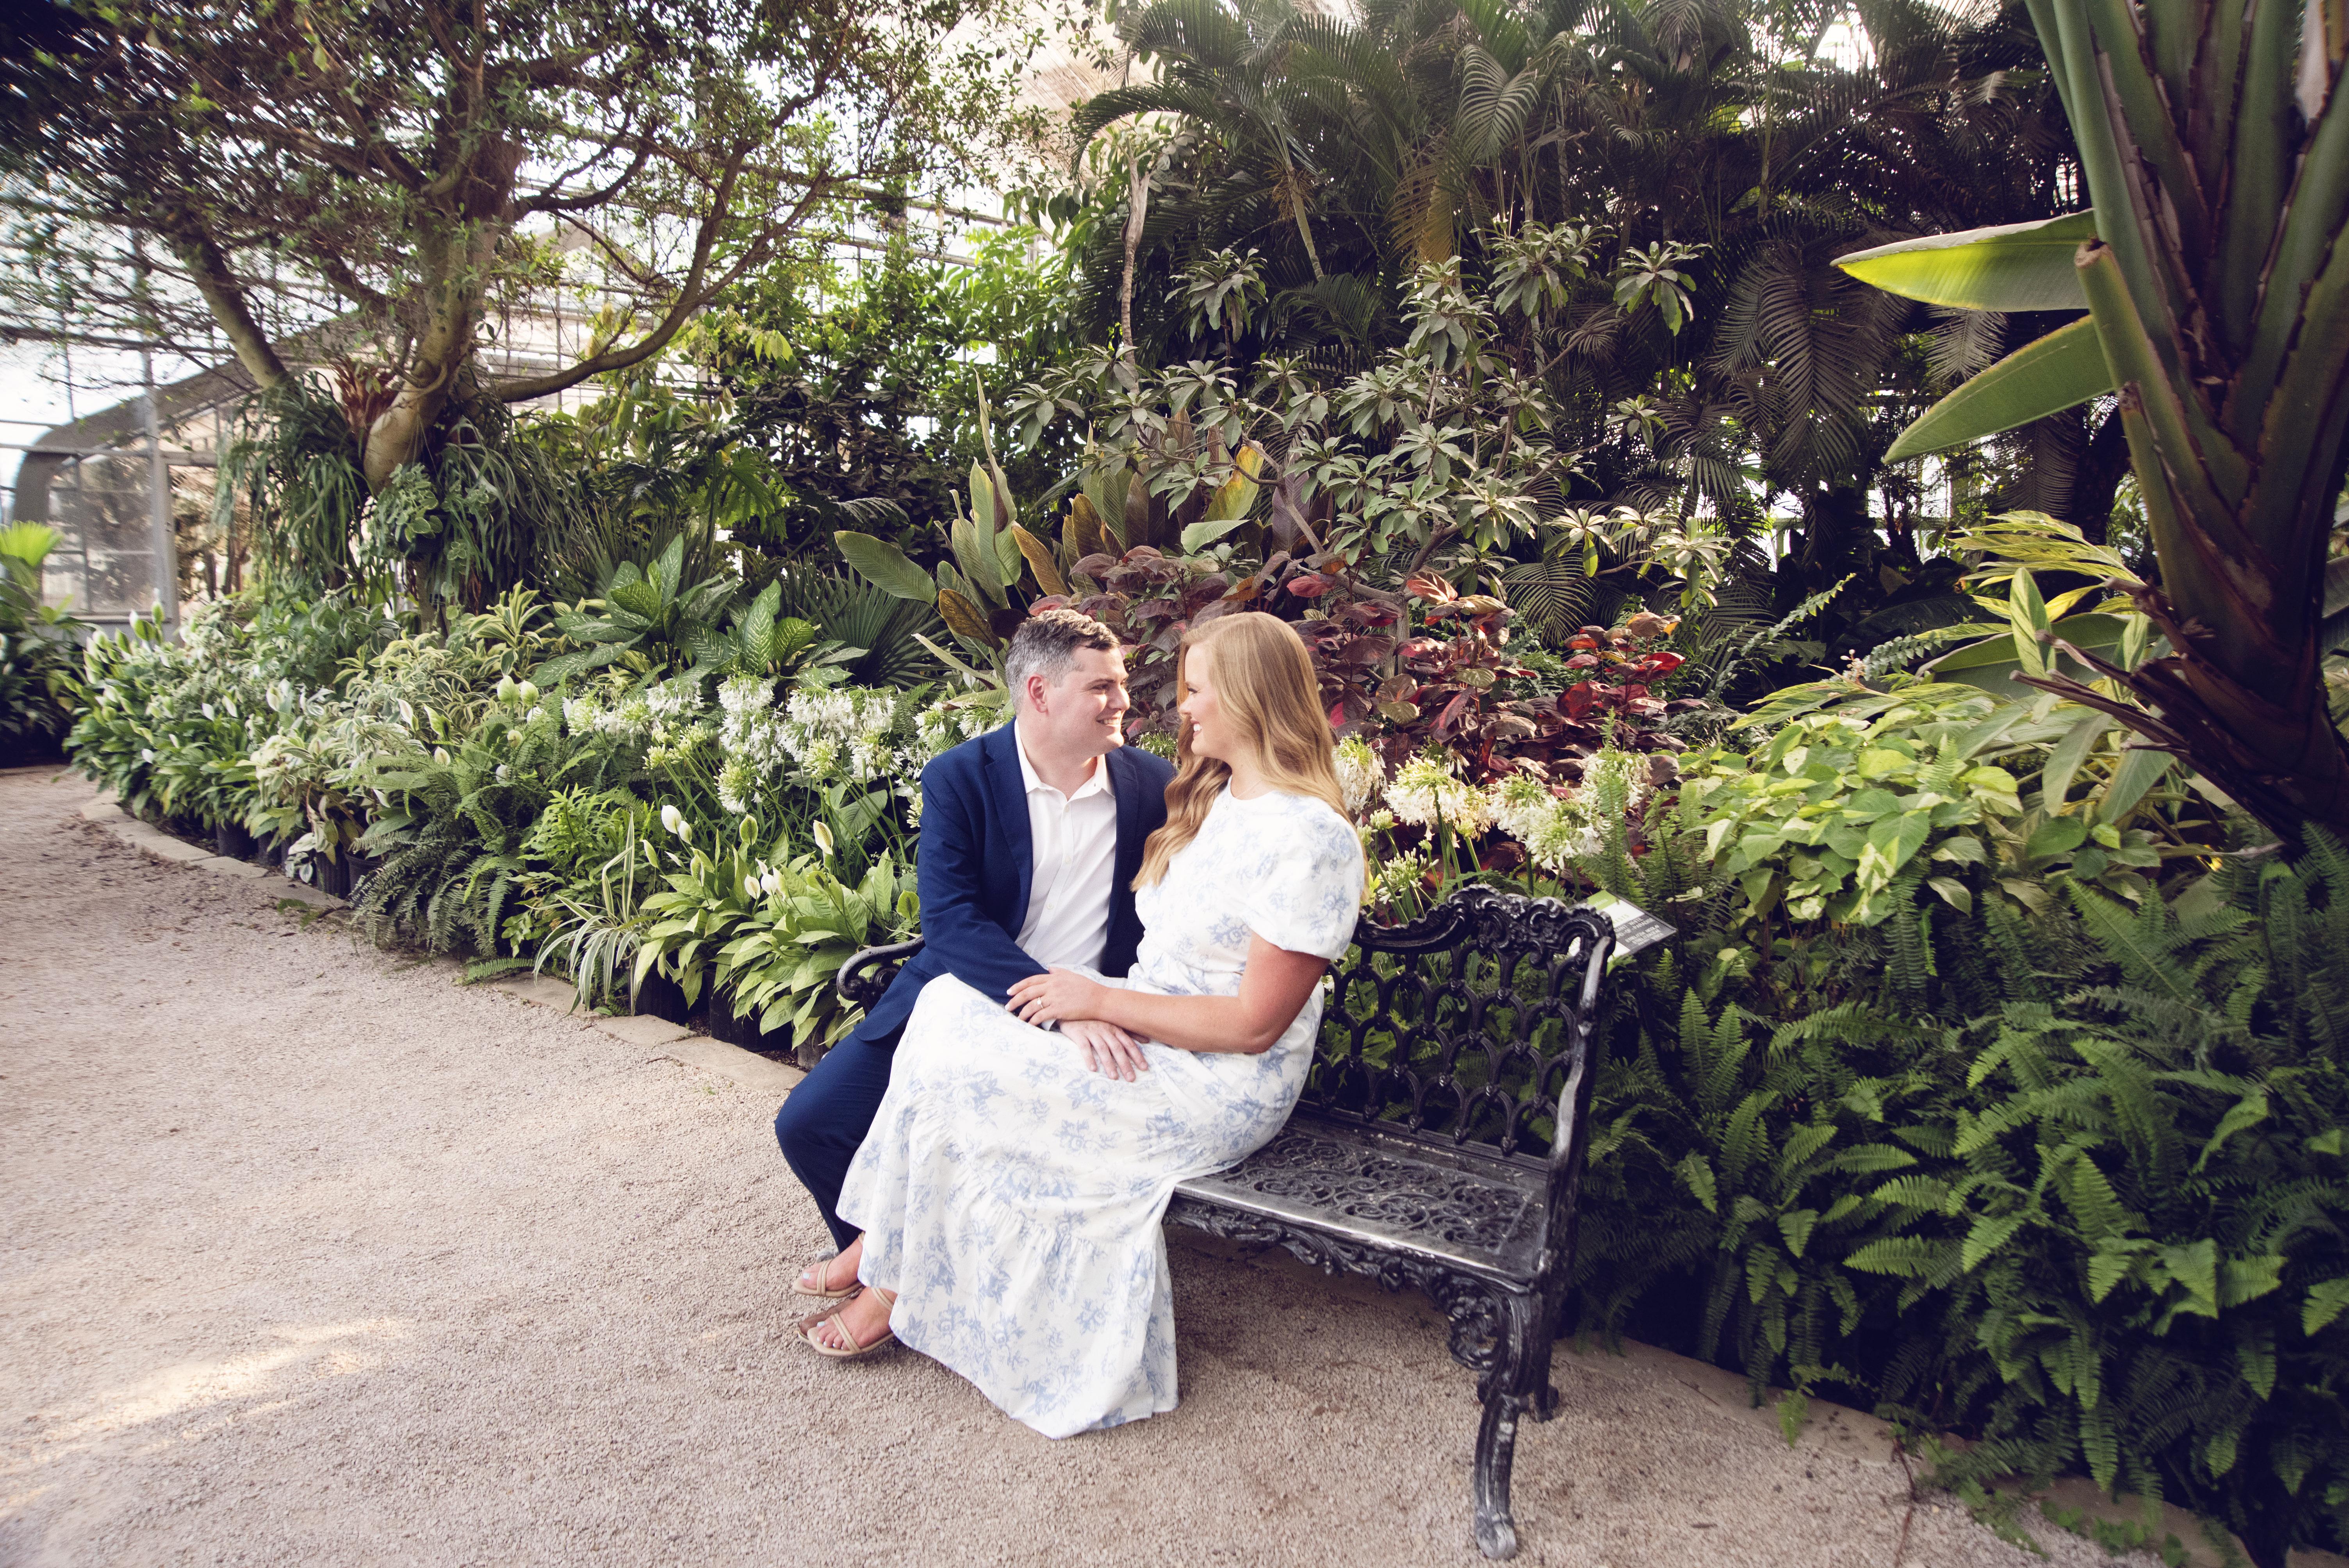 The Wedding Website of Jenna Huerkamp and Sam Hudson